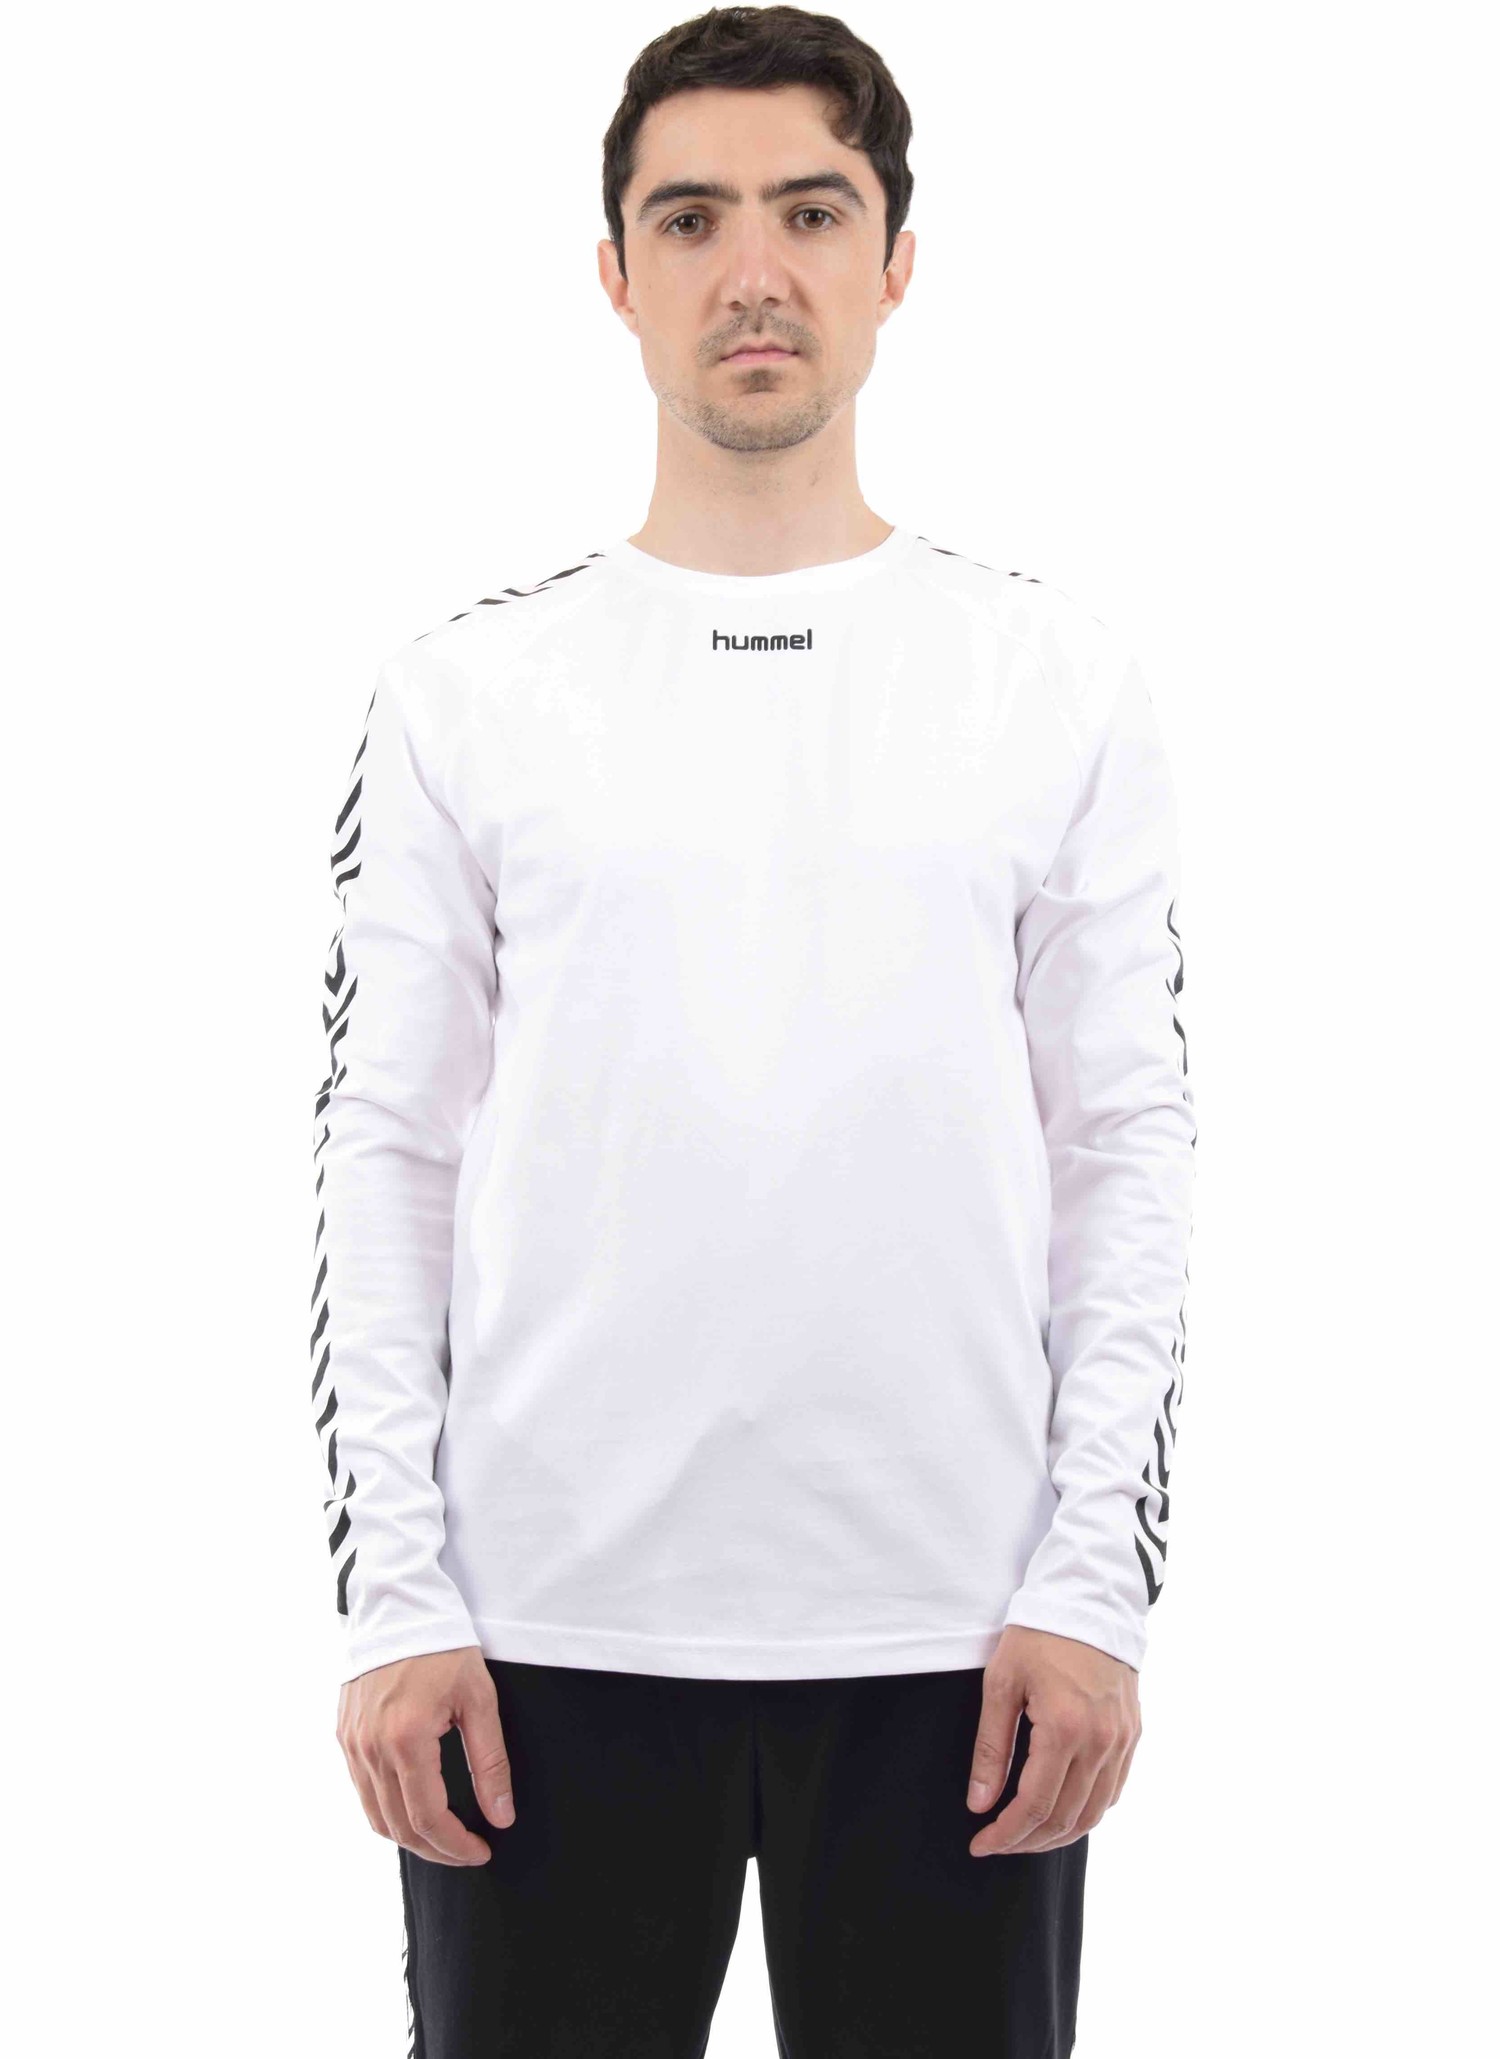 Hummel Hive Agge T-Shirt - Sleeve HALO | White HALO Long